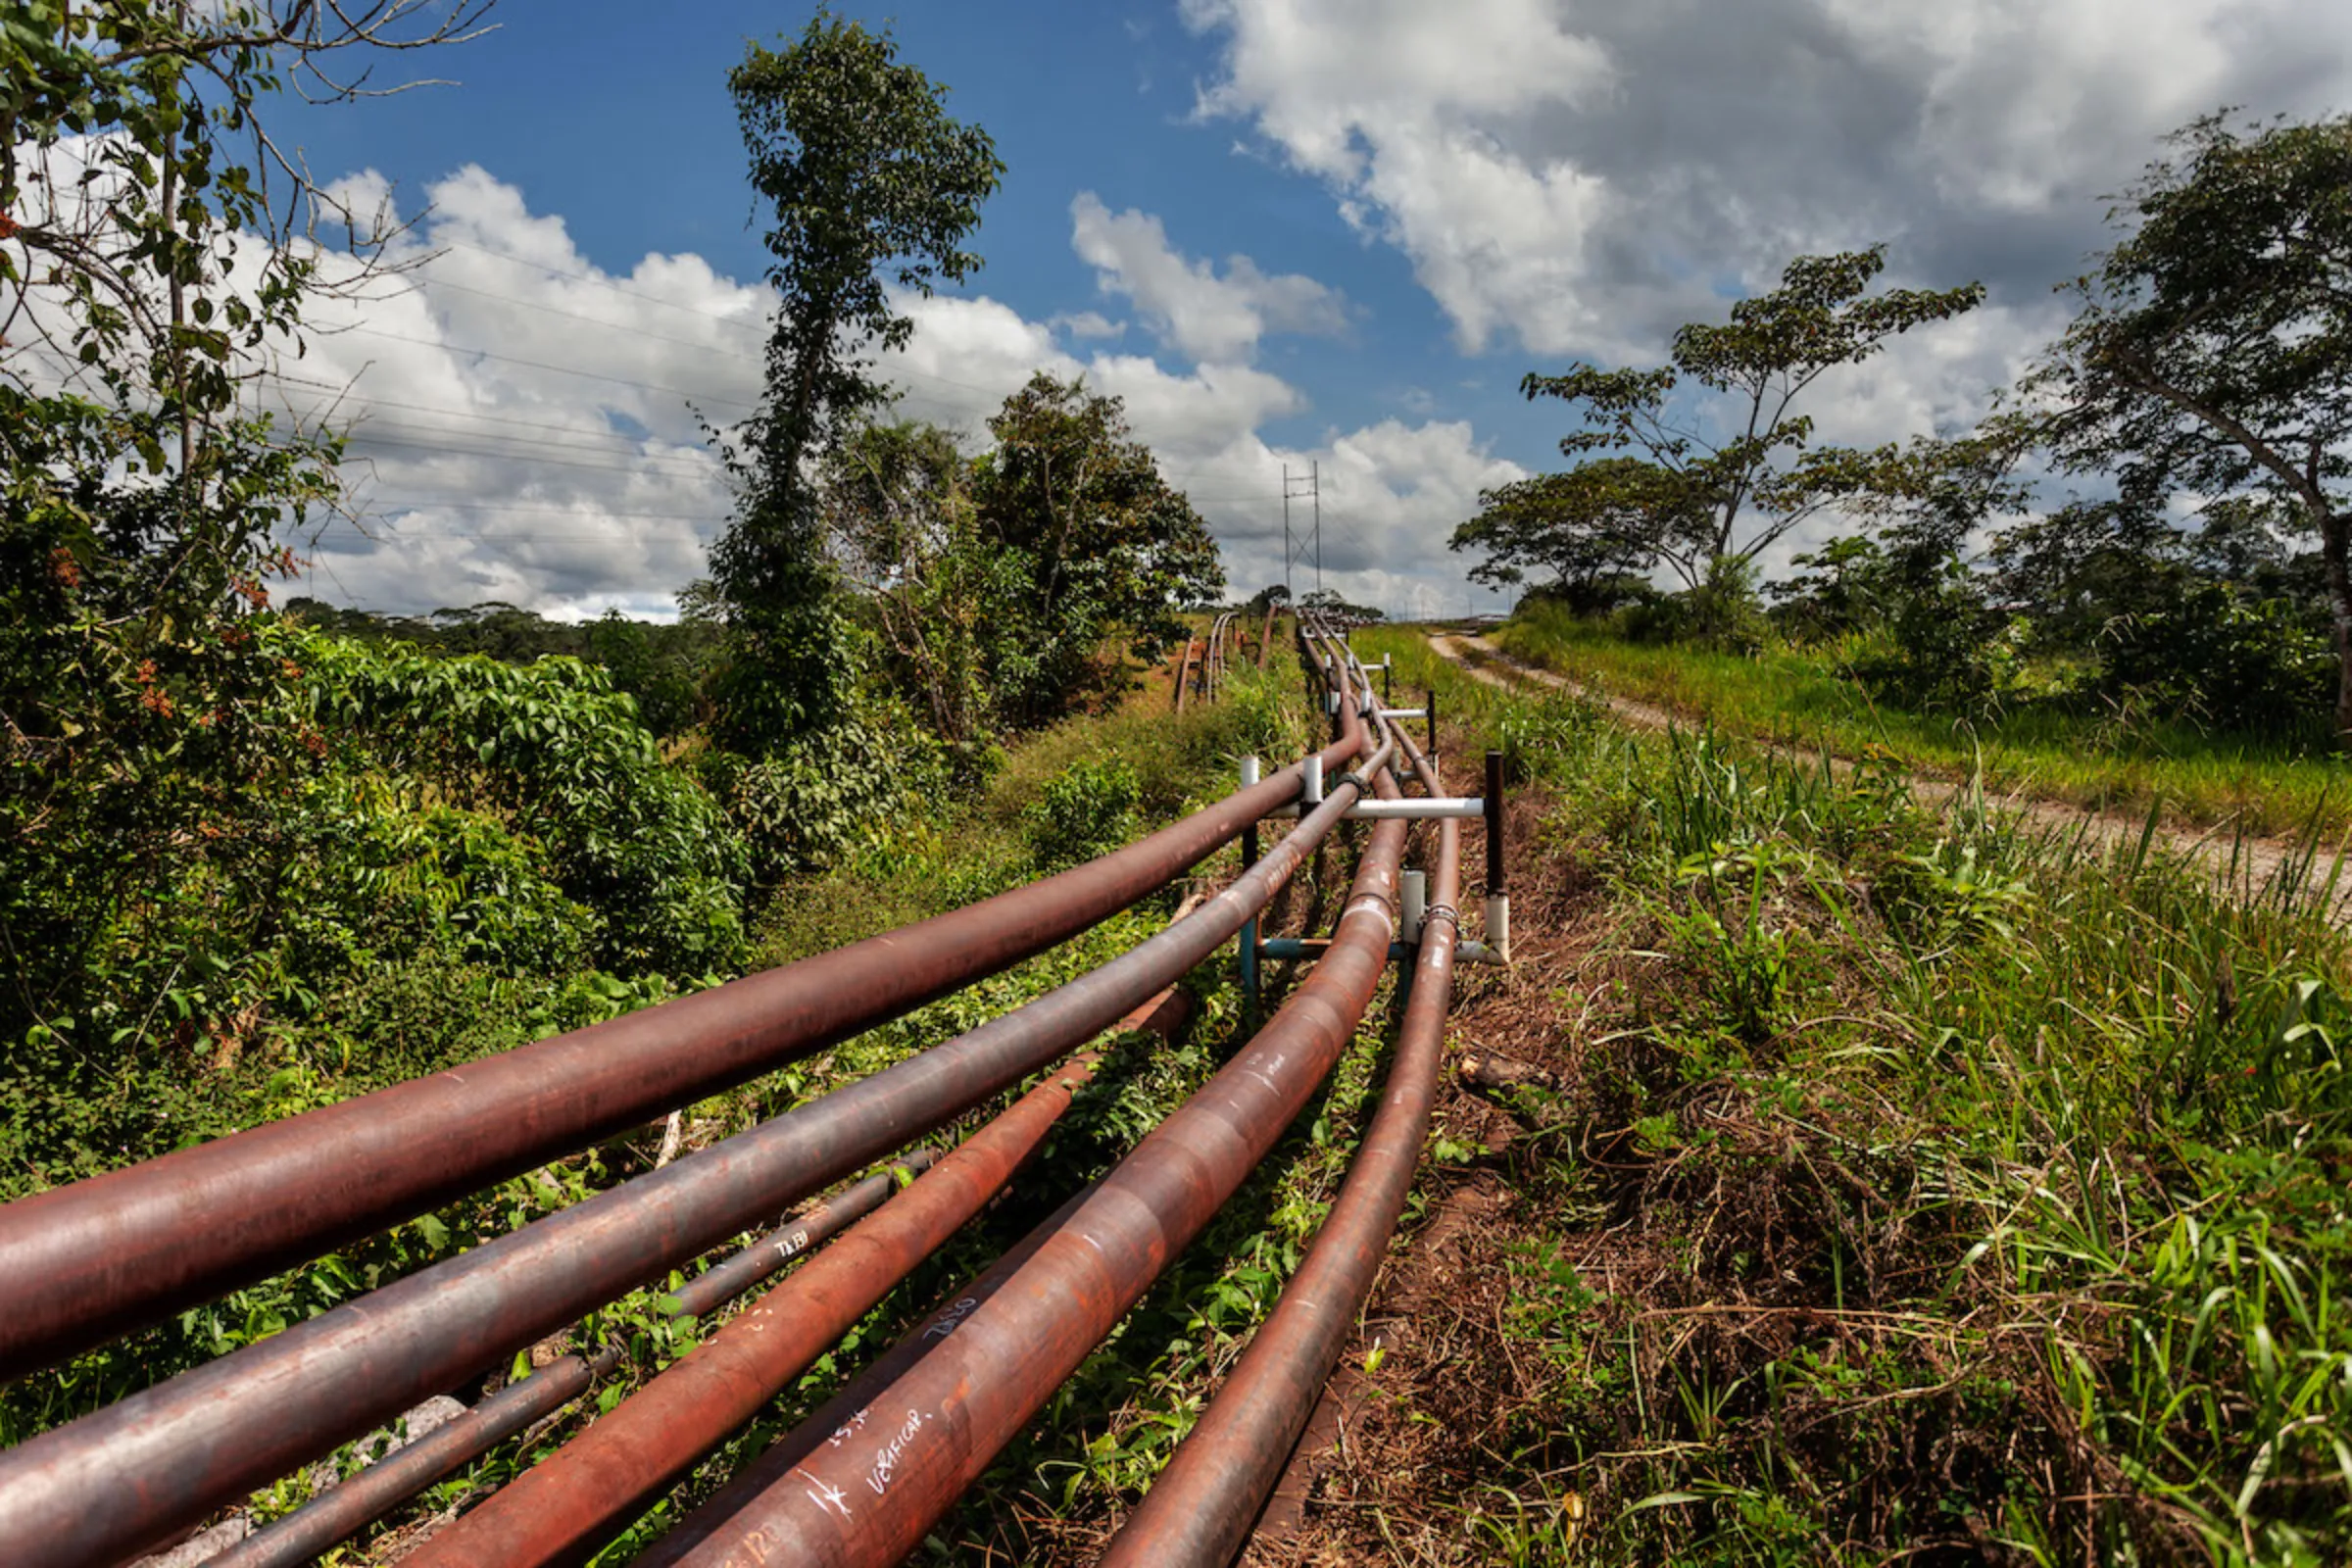 Oil pipelines run alongside roads in Ecuador's Amazon rainforest near Lago Agrio. April 23, 2022. Thomson Reuters Foundation/Fabio Cuttica